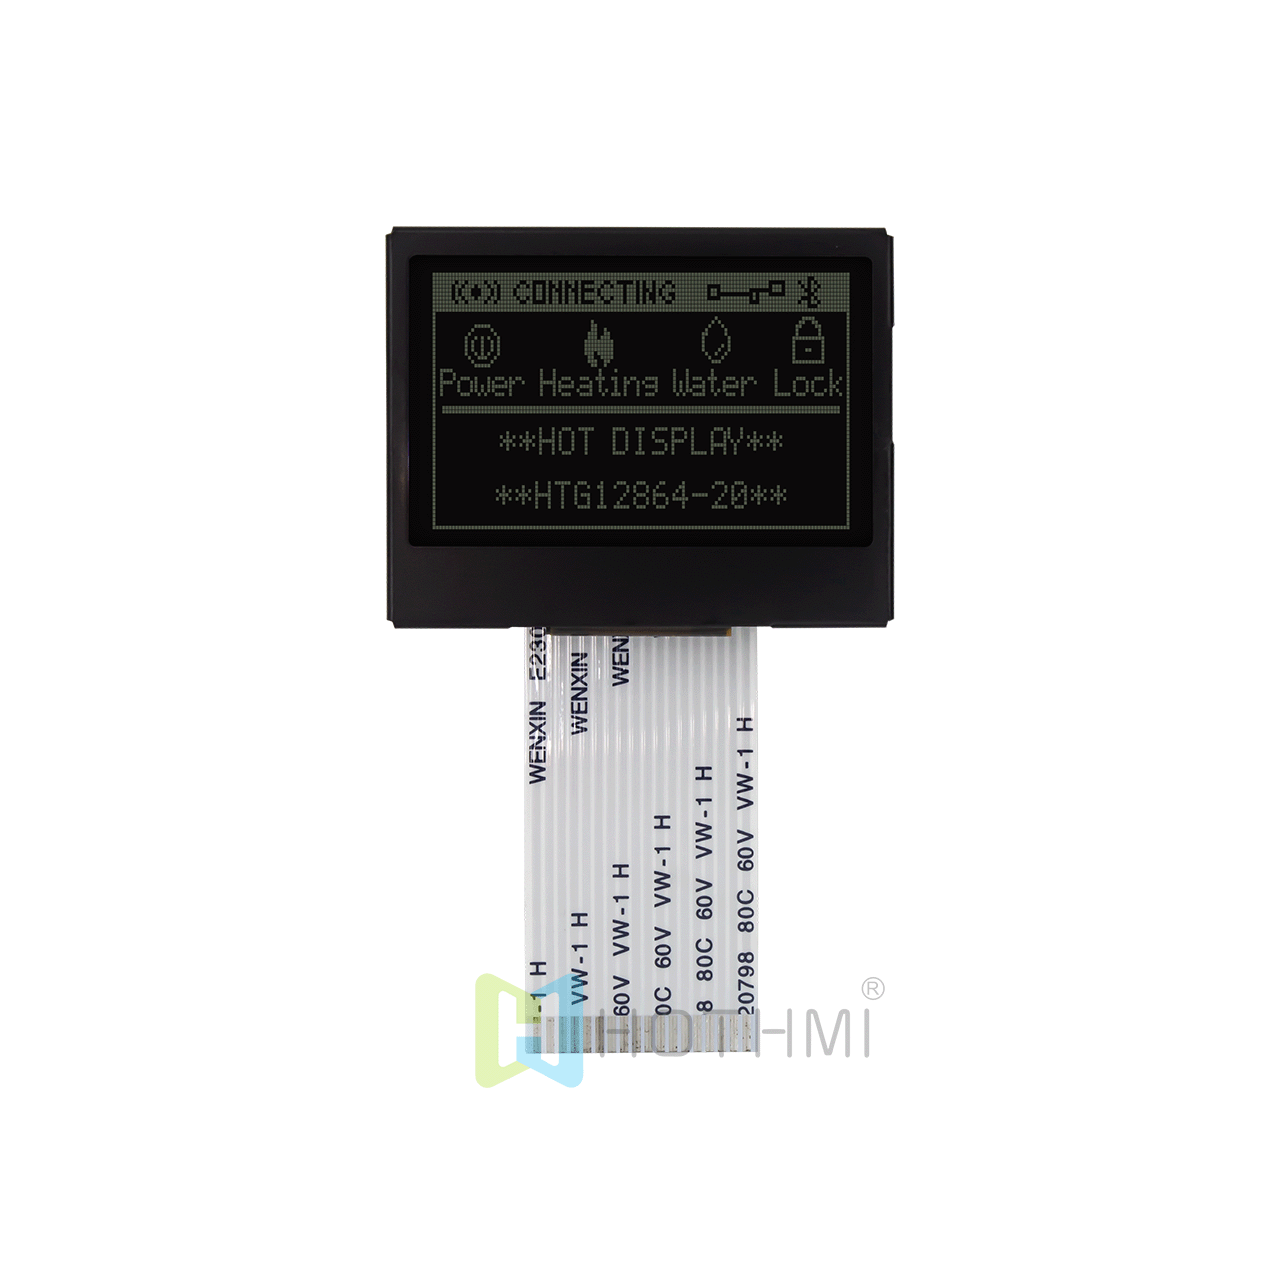 1.7-inch LCD12864 LCD screen/LCM128x64 graphic dot matrix module/white text on black background/MCU interface